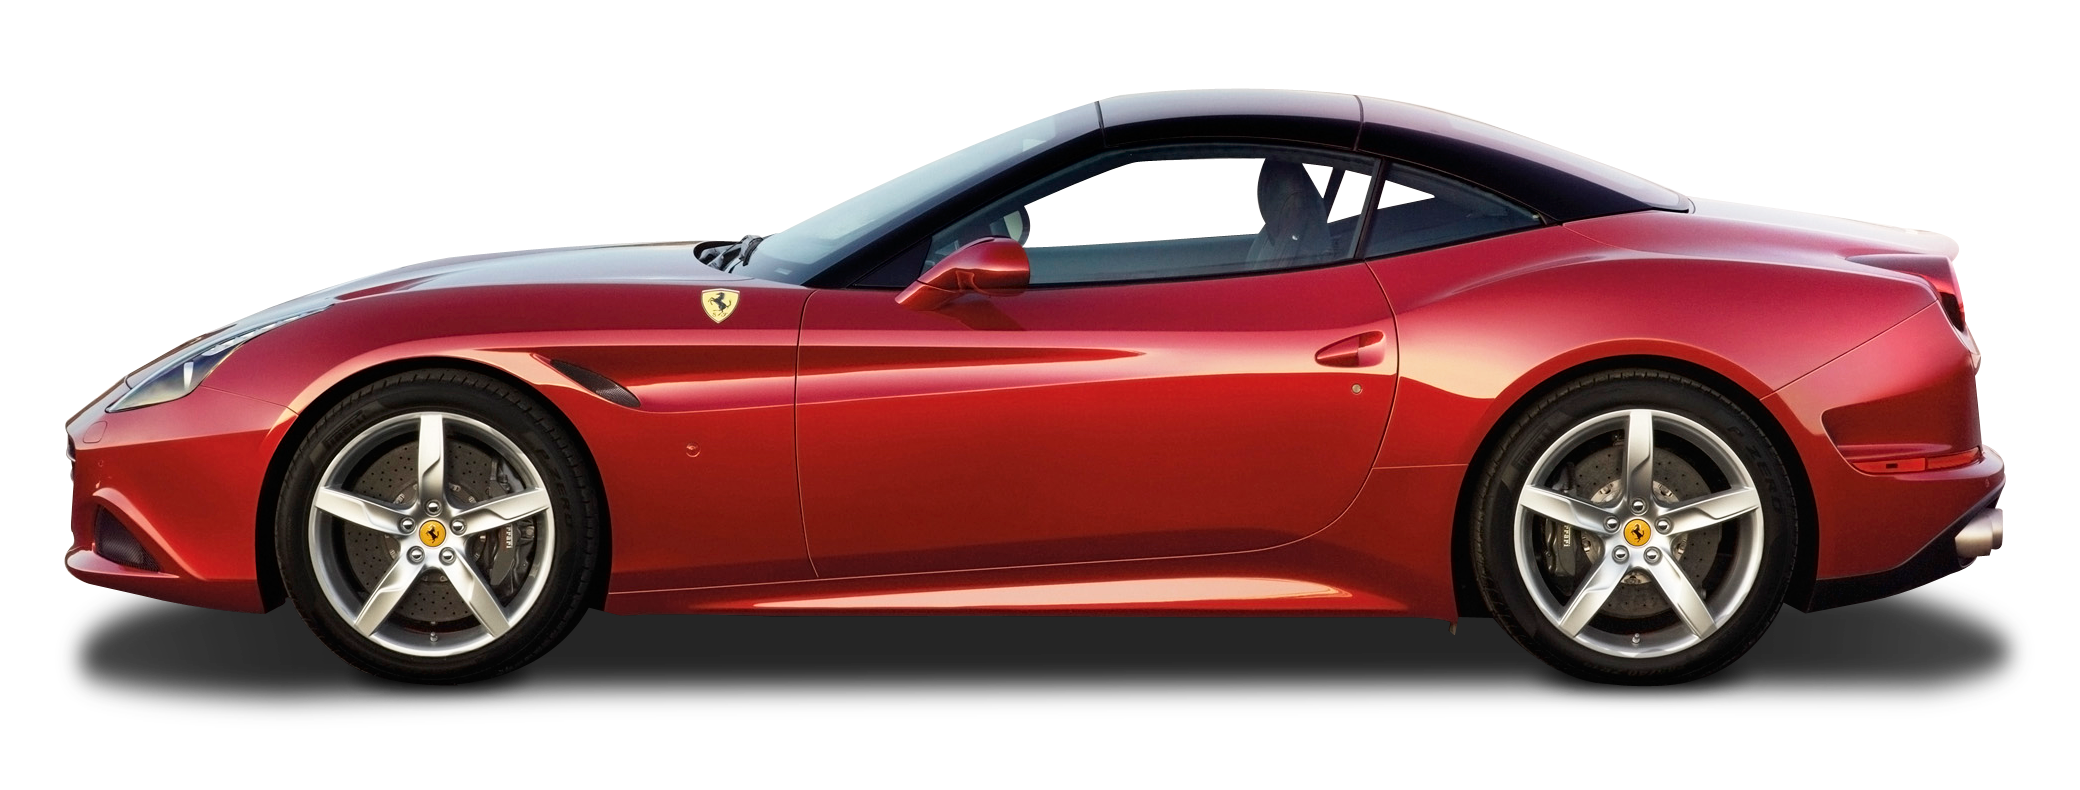 Ferrari California exterior - Side Profile